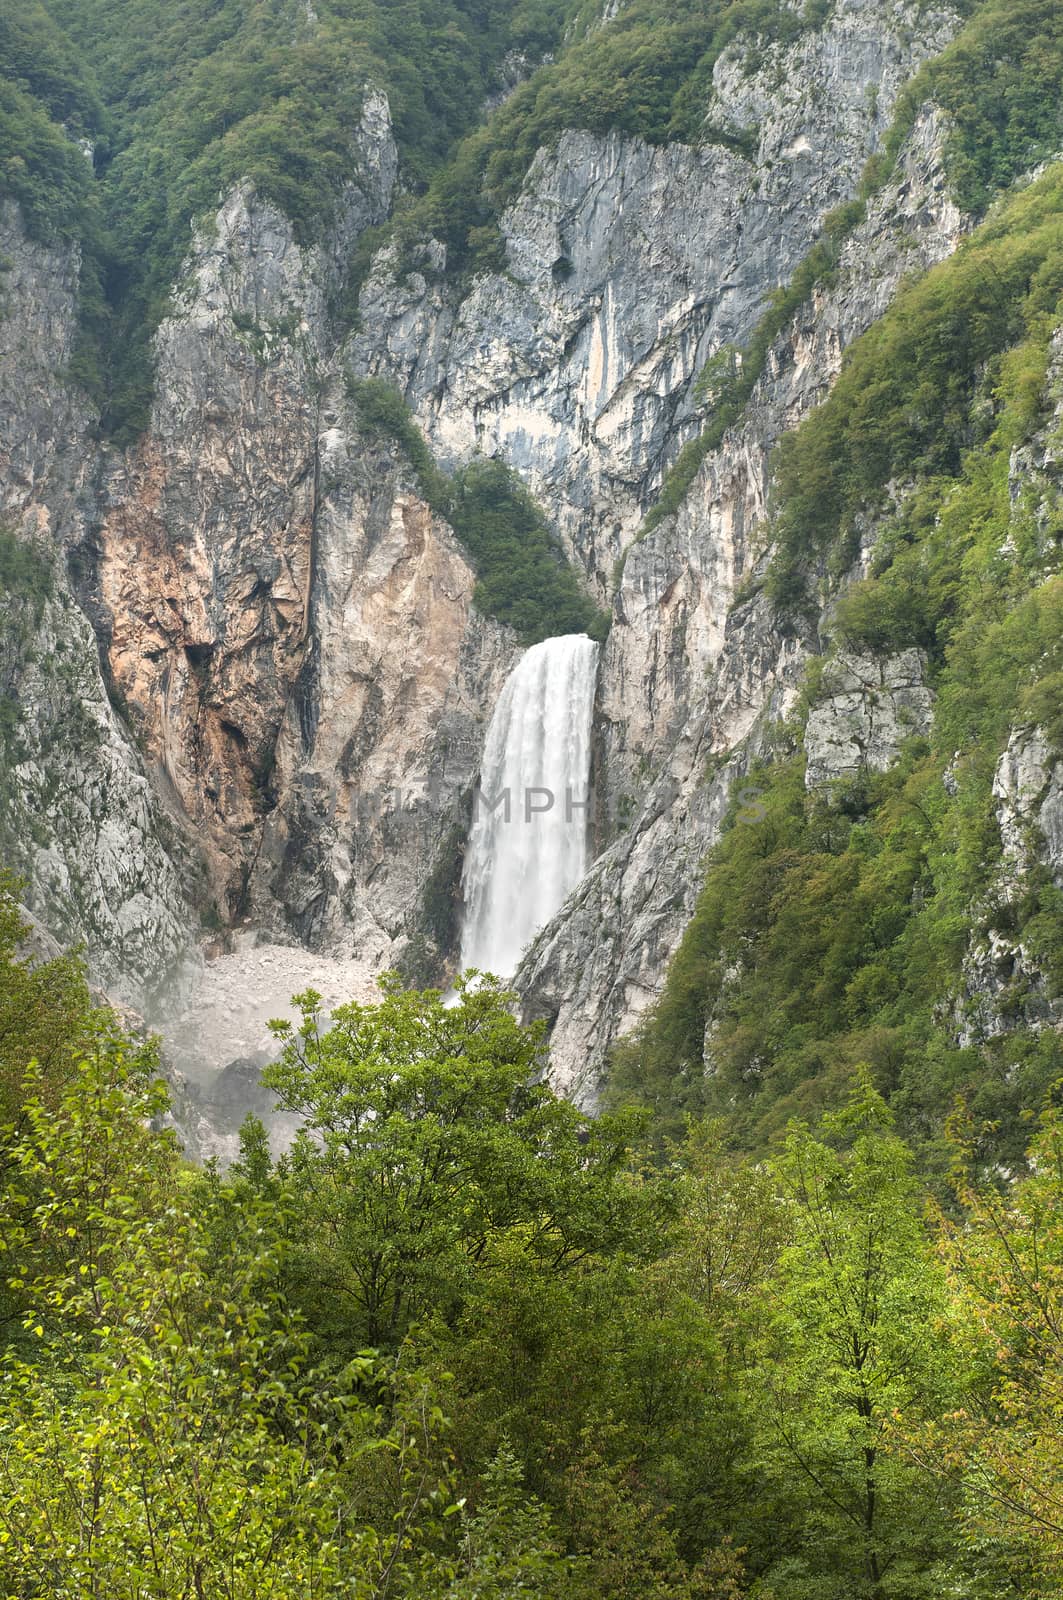 A view of Boka waterfall in Tolmin, Slovenia